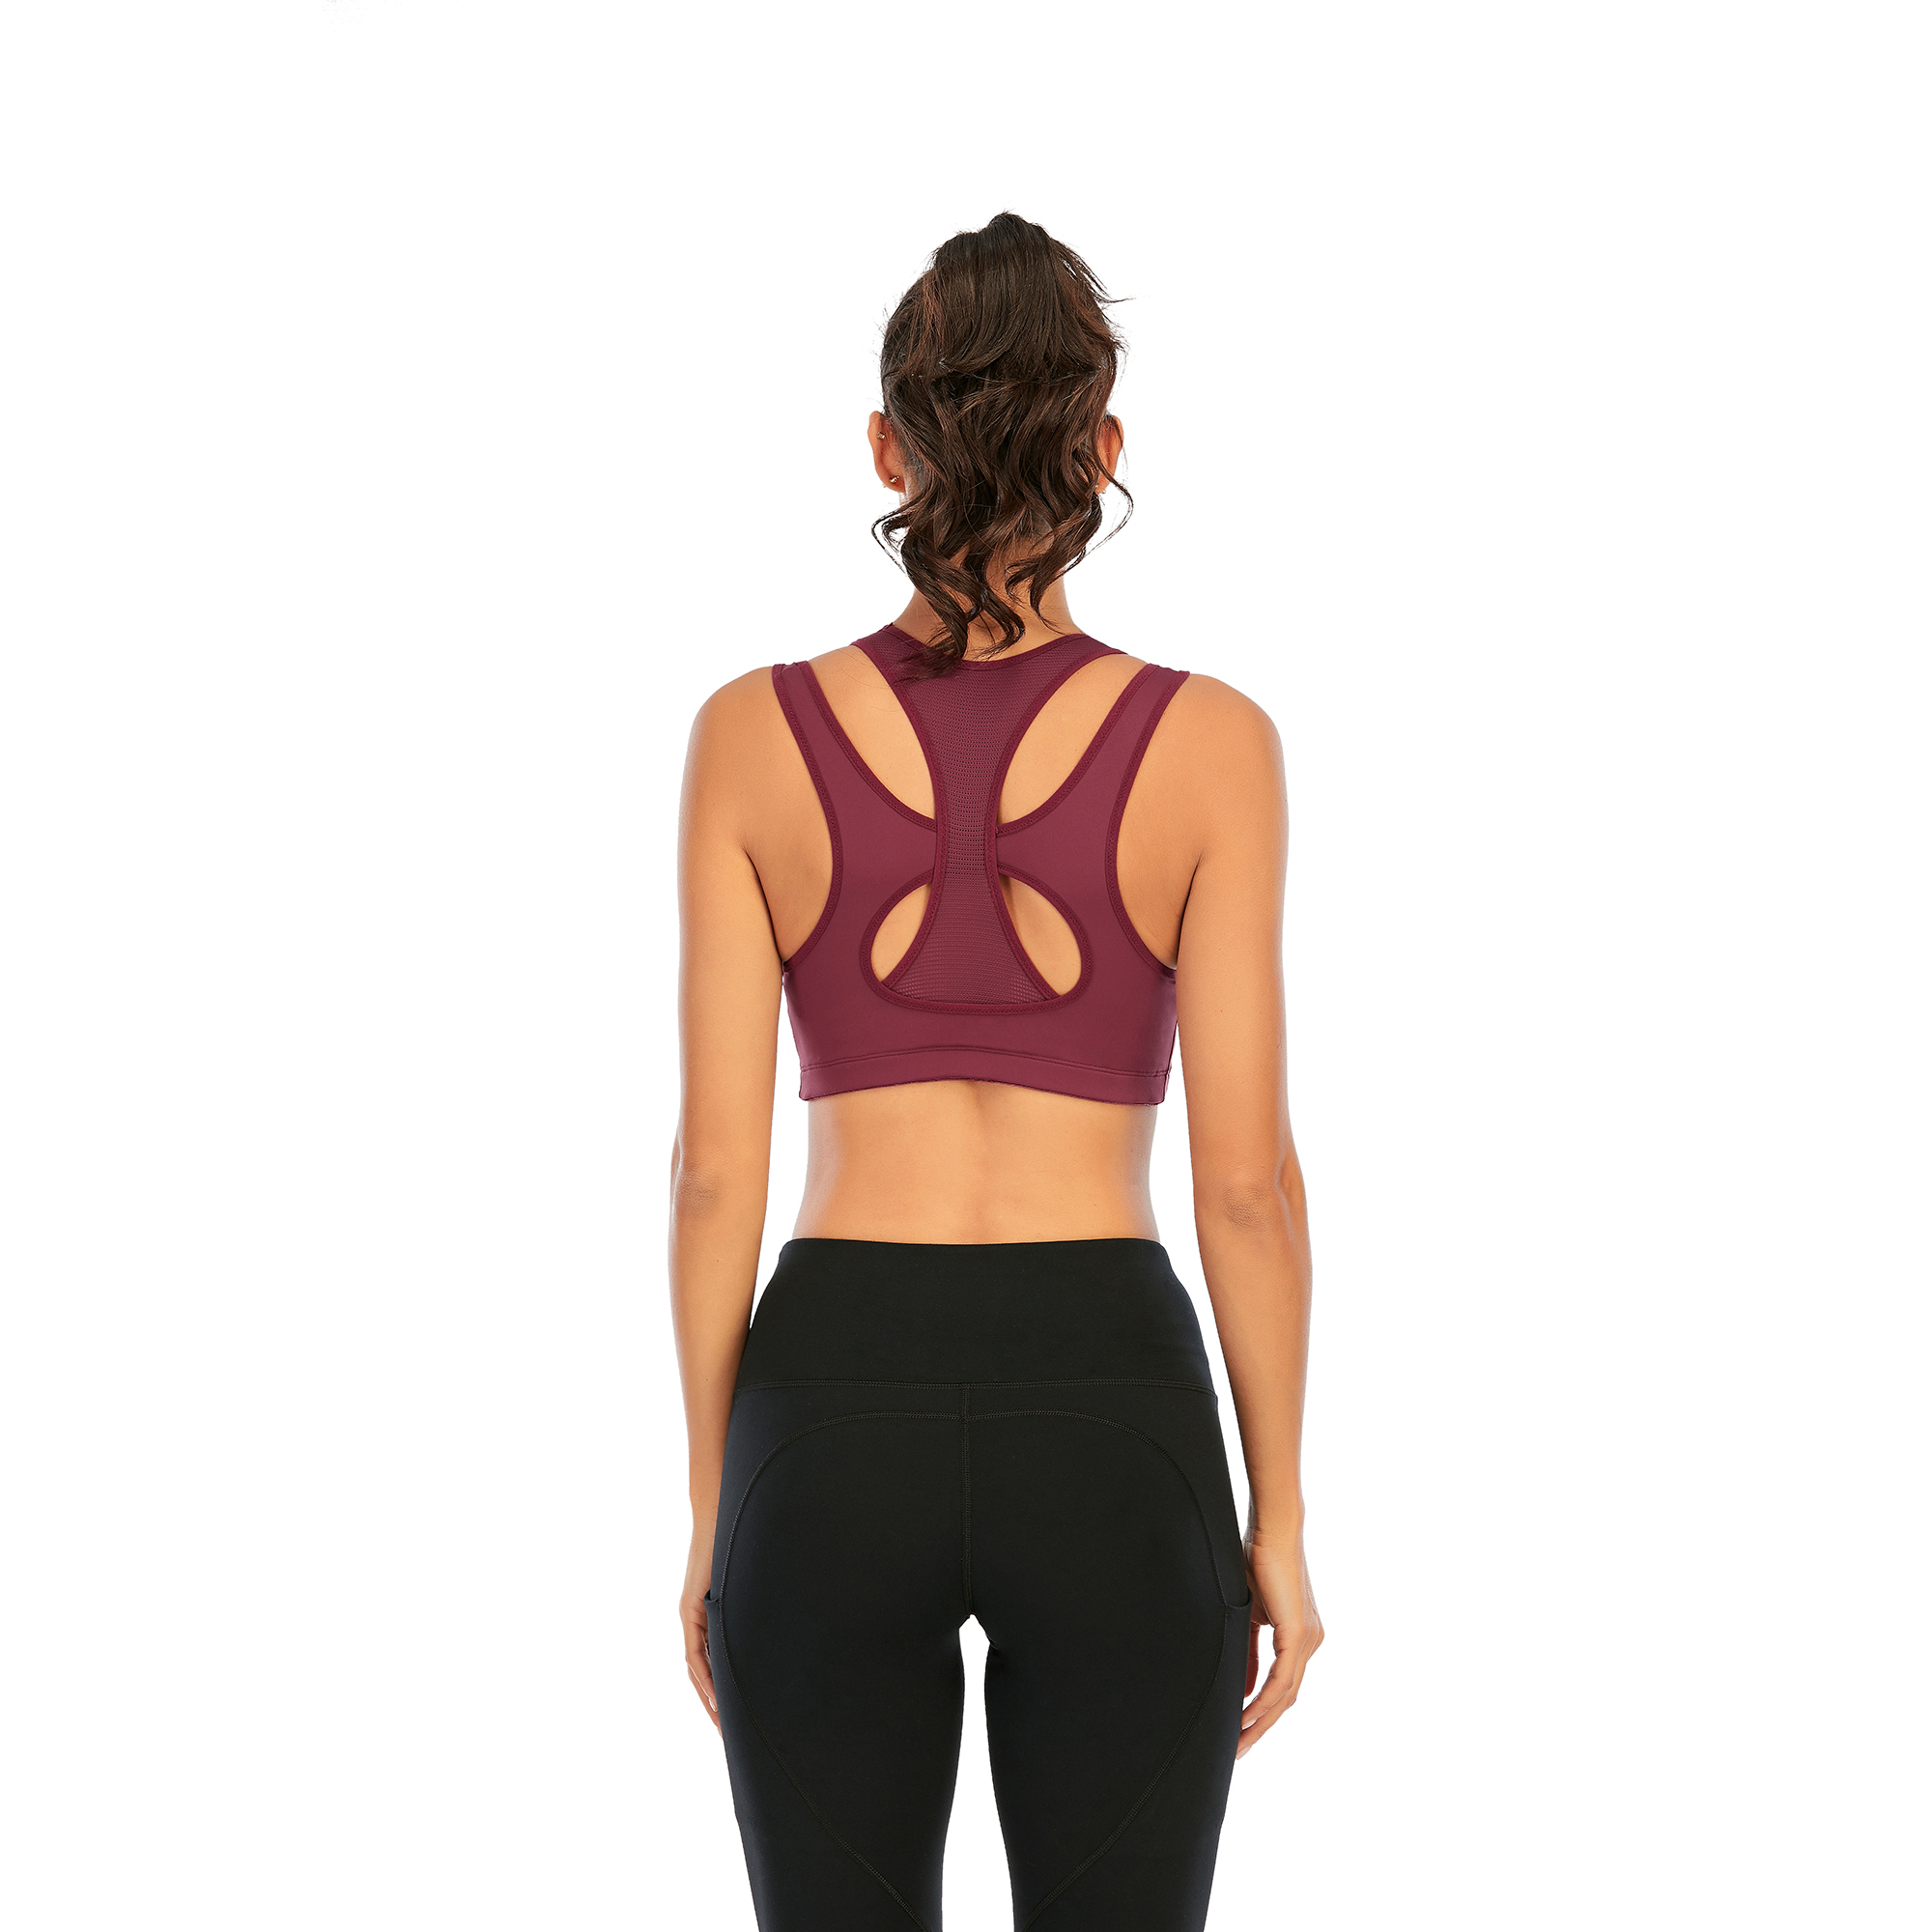 Girderless mesh back double layer Yoga Sports bra women's quick